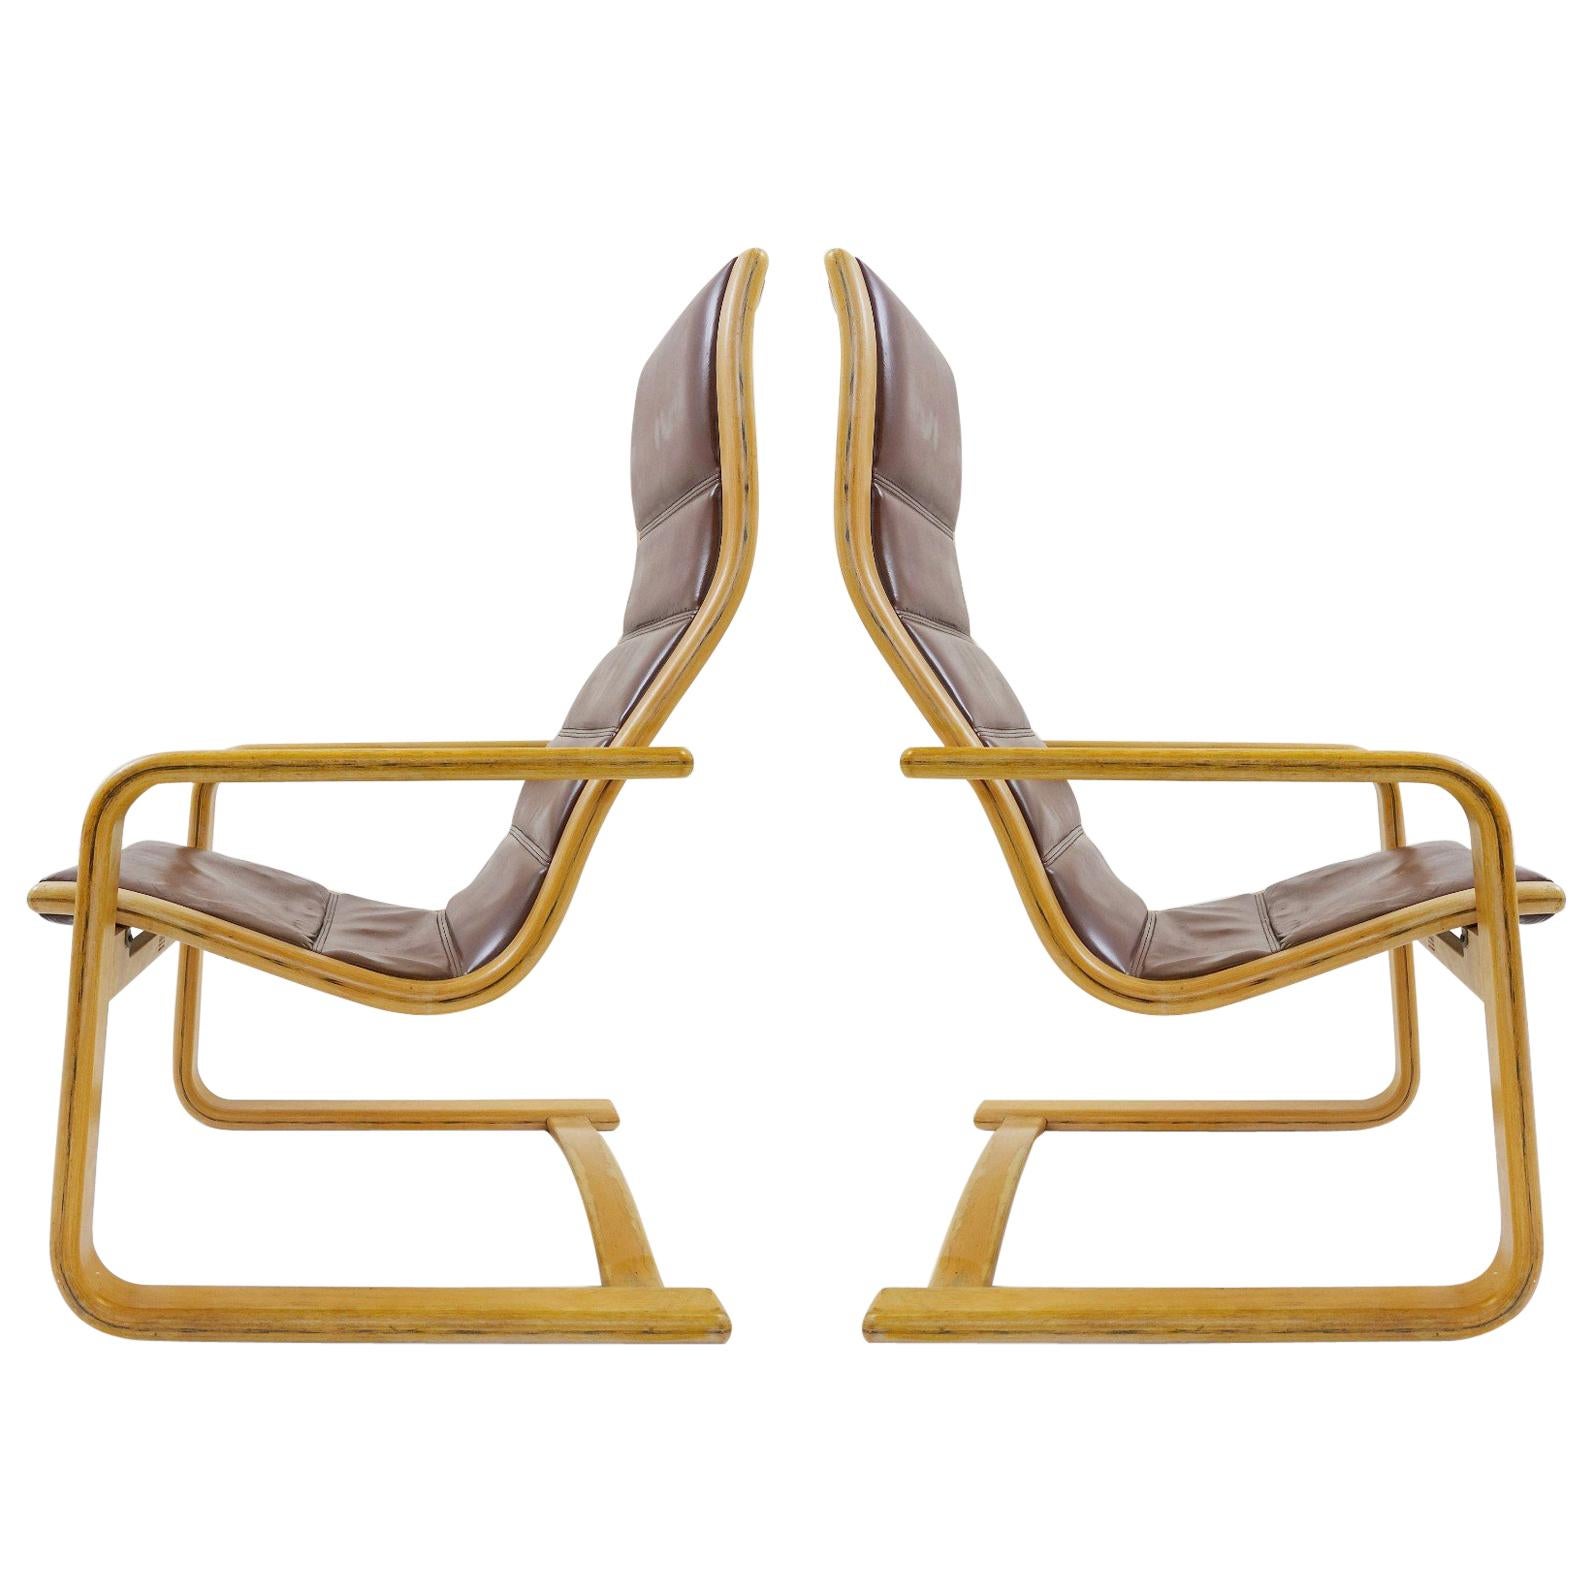  Pair of Swedese "Lamello" Easy Chairs, Yngve Ekström